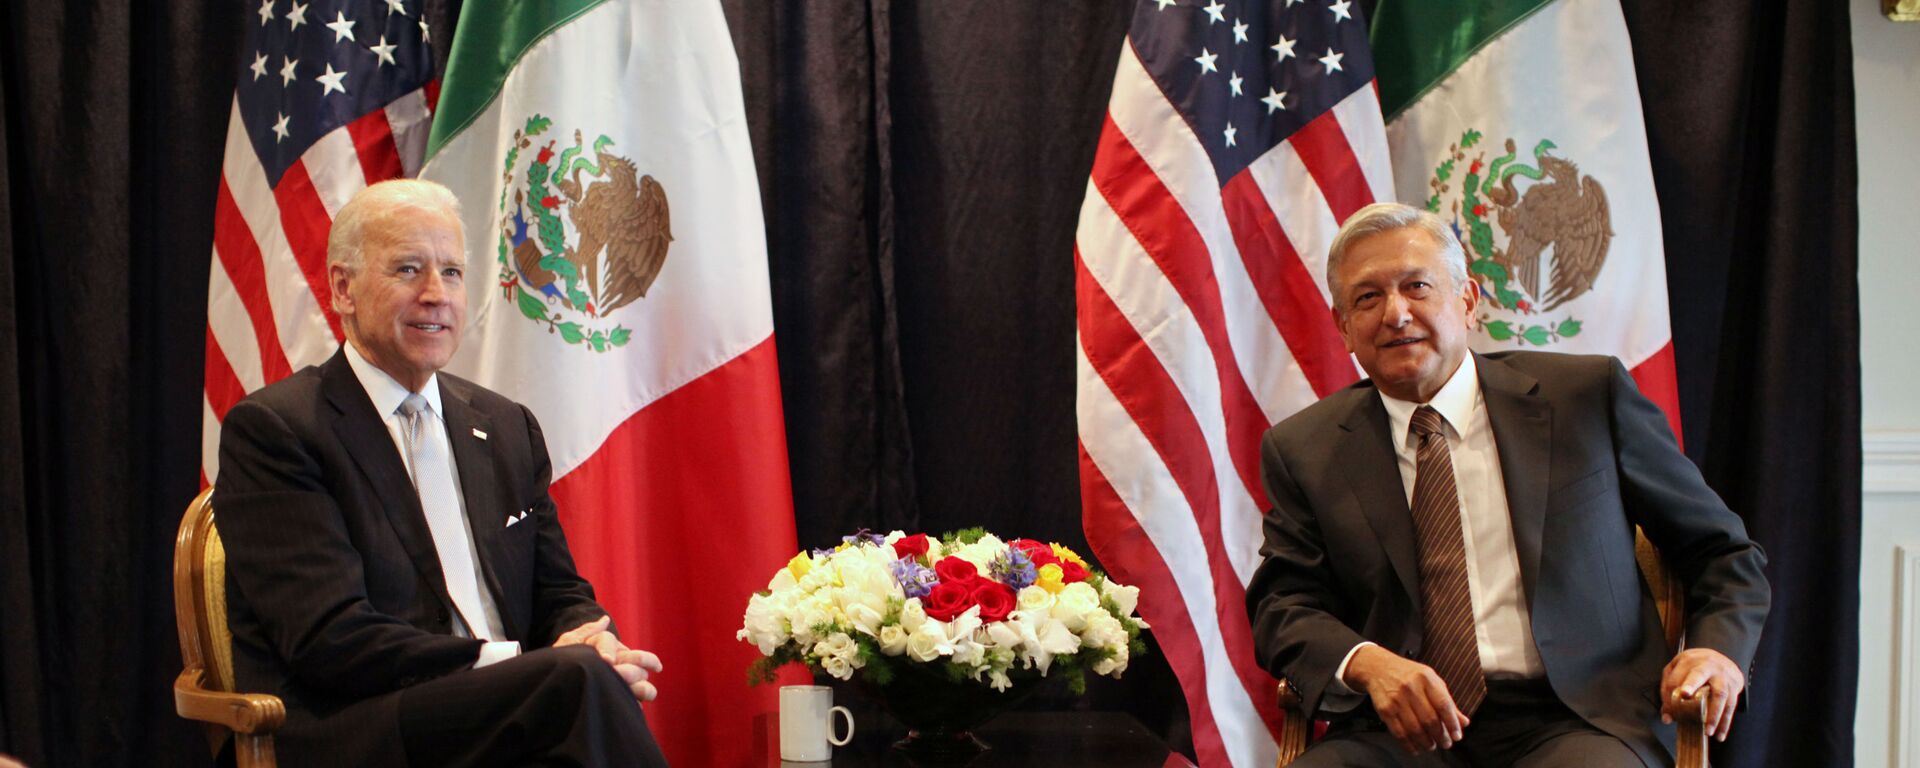 Joe Biden y Andrés Manuel López Obrador, 2012 - Sputnik Mundo, 1920, 11.08.2021